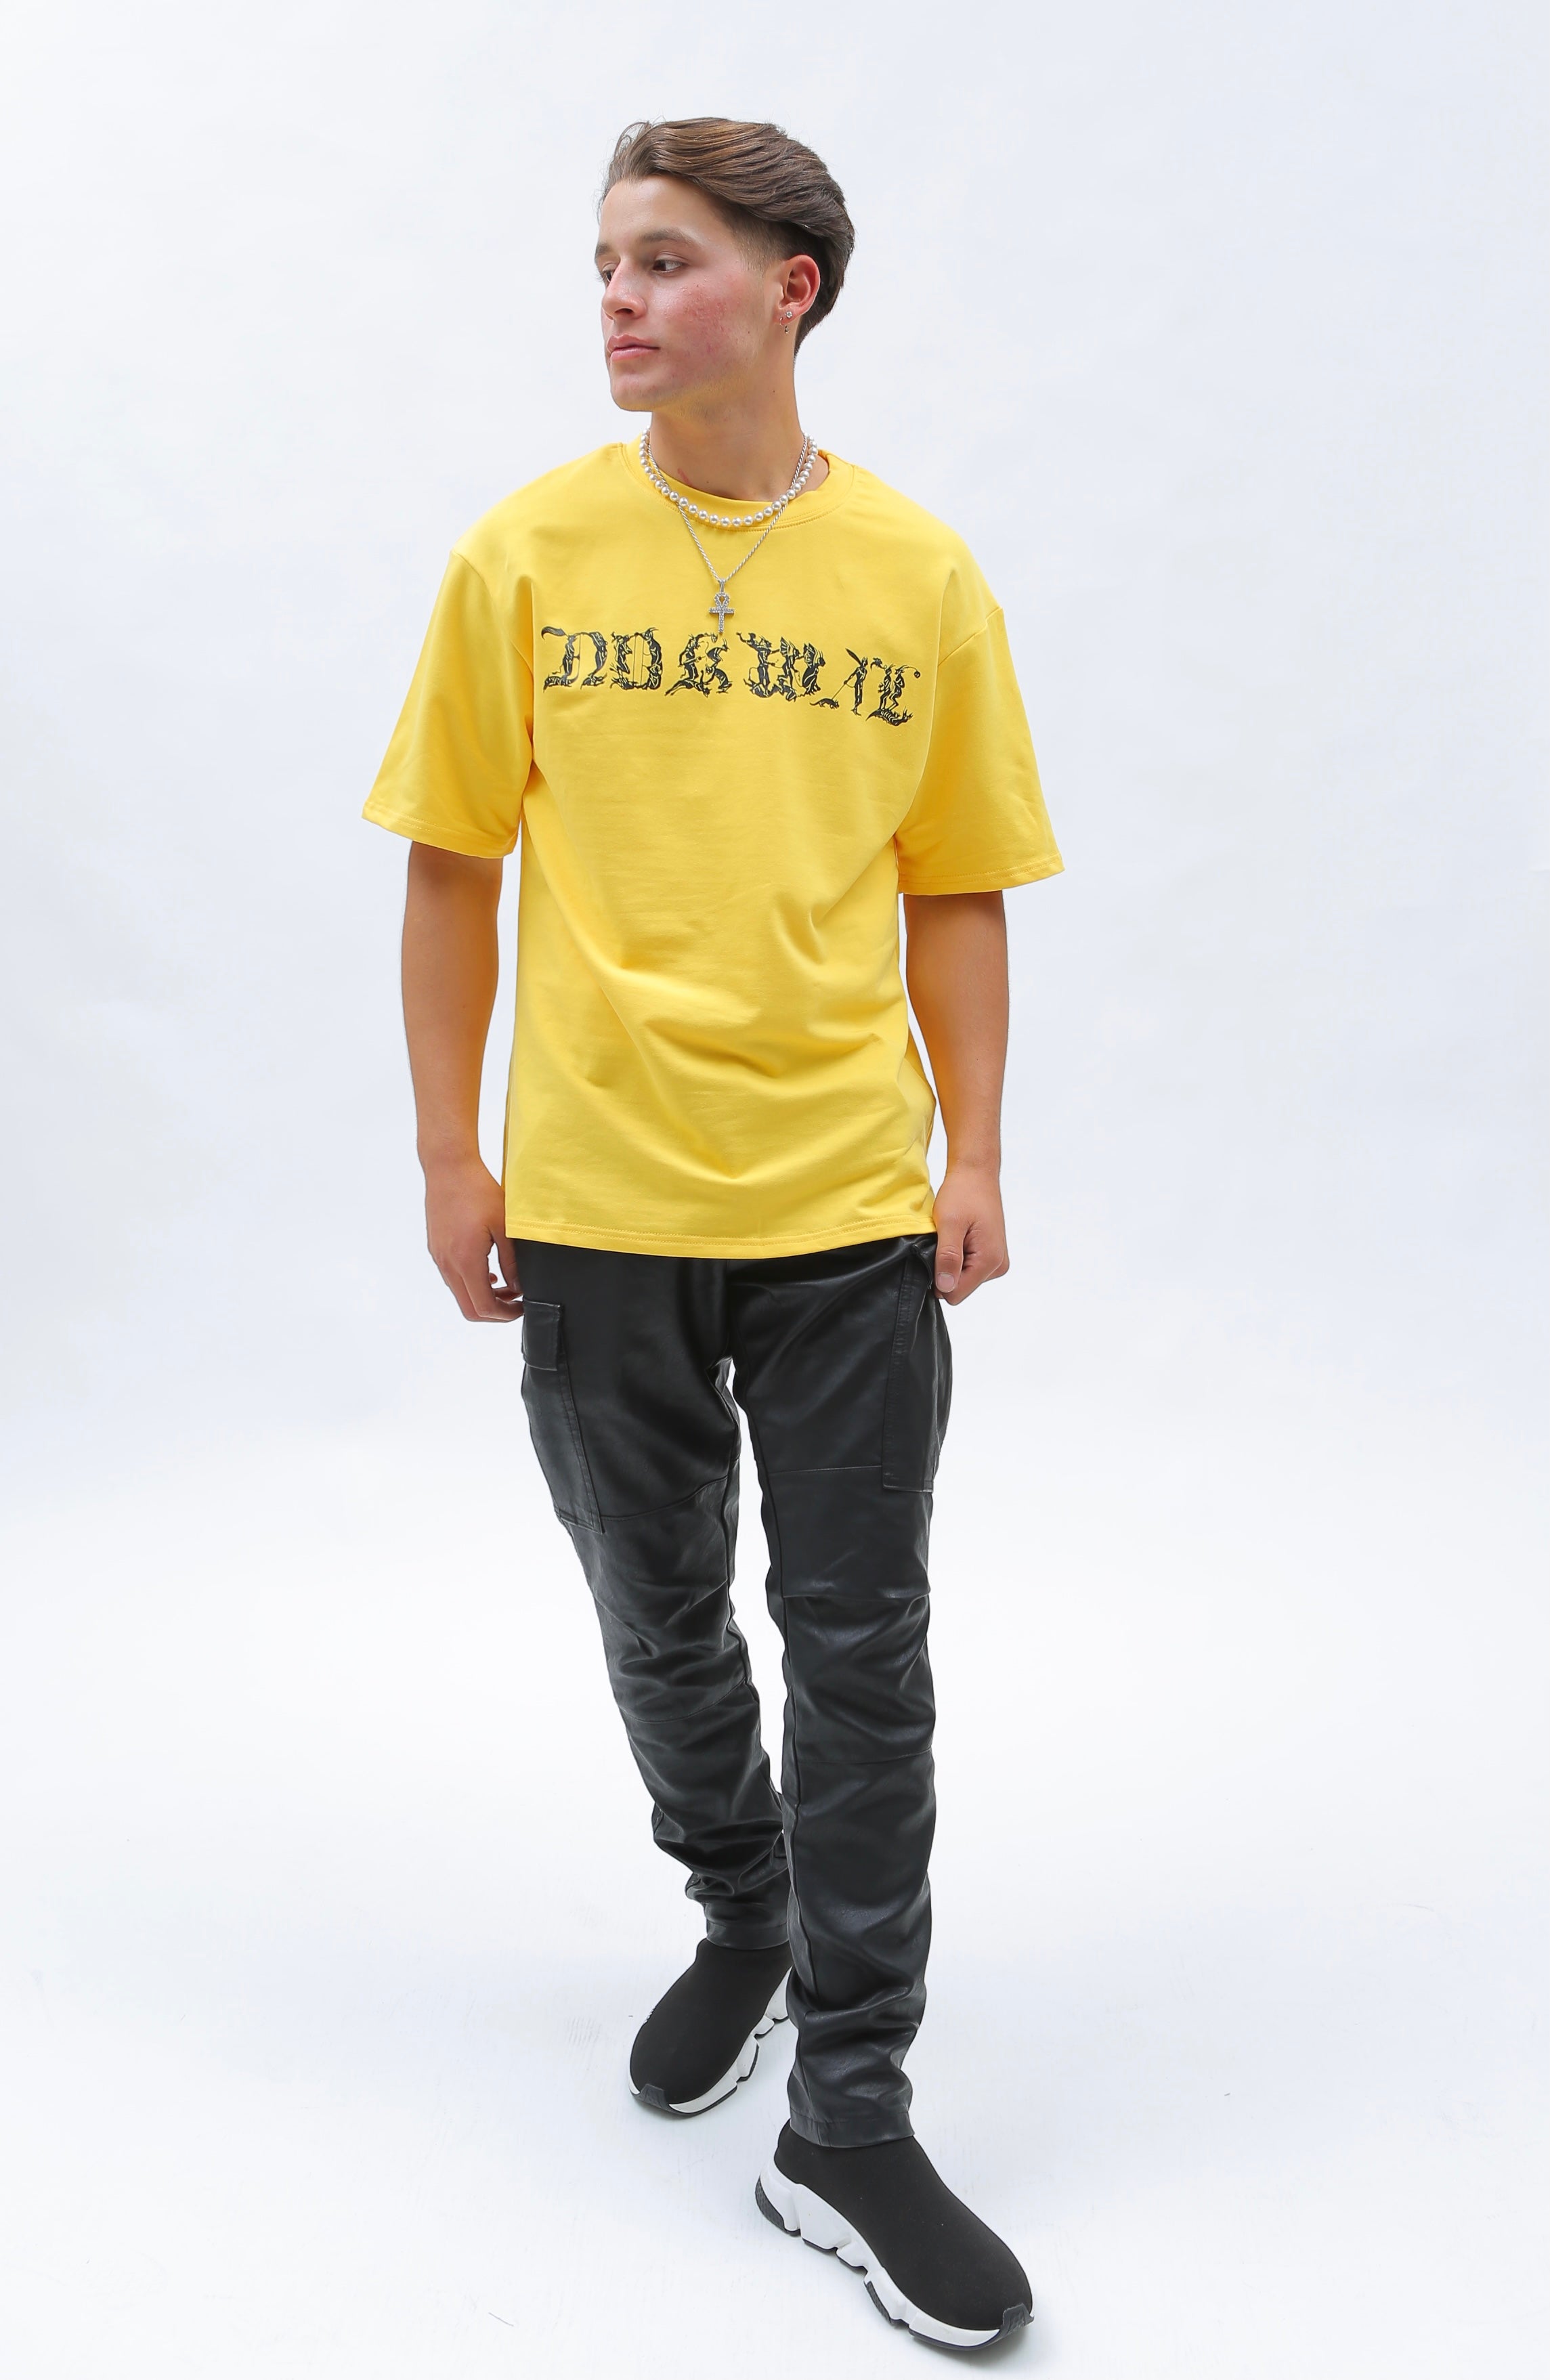 Nokwal Devils T-Shirt - Yellow